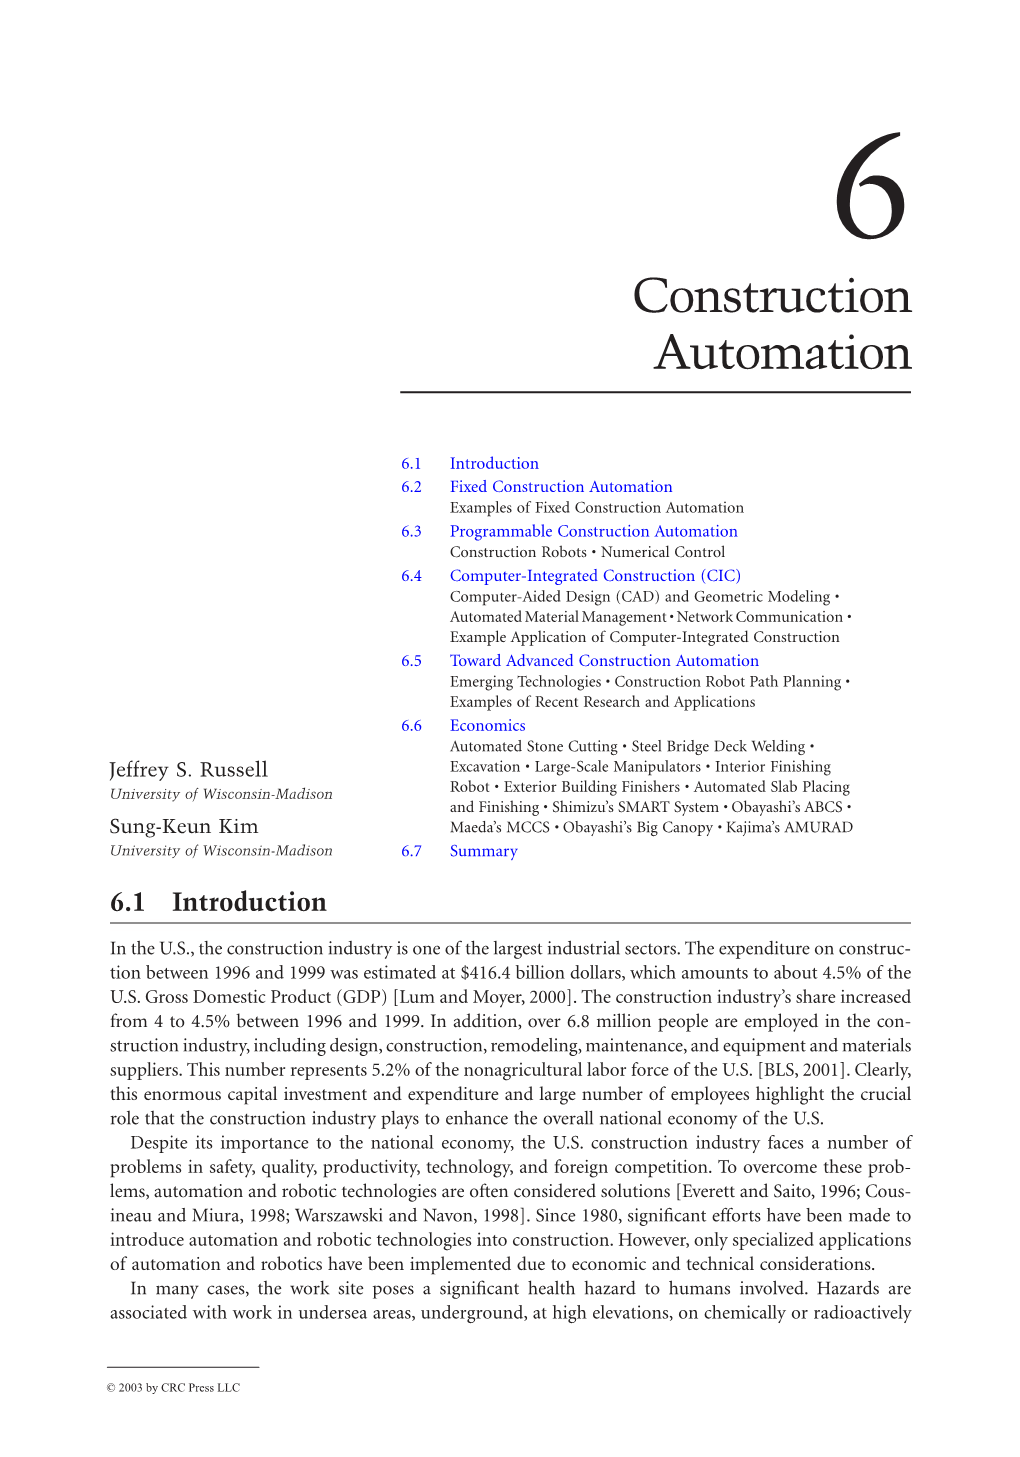 Construction Automation